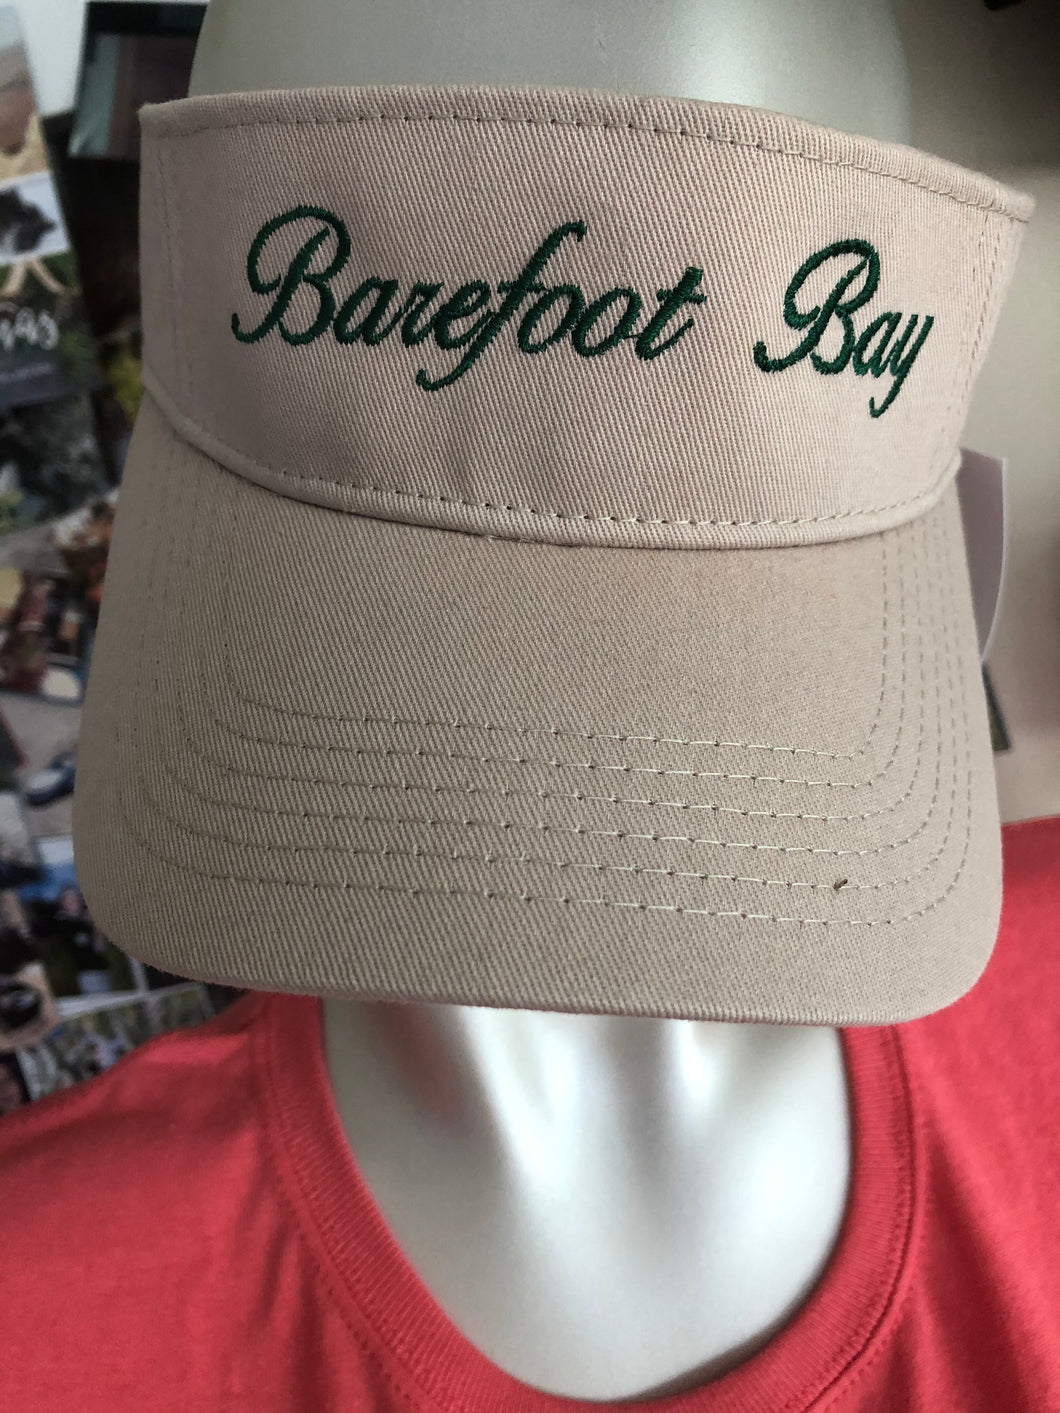 Tan visor with Green Barefoot Bay